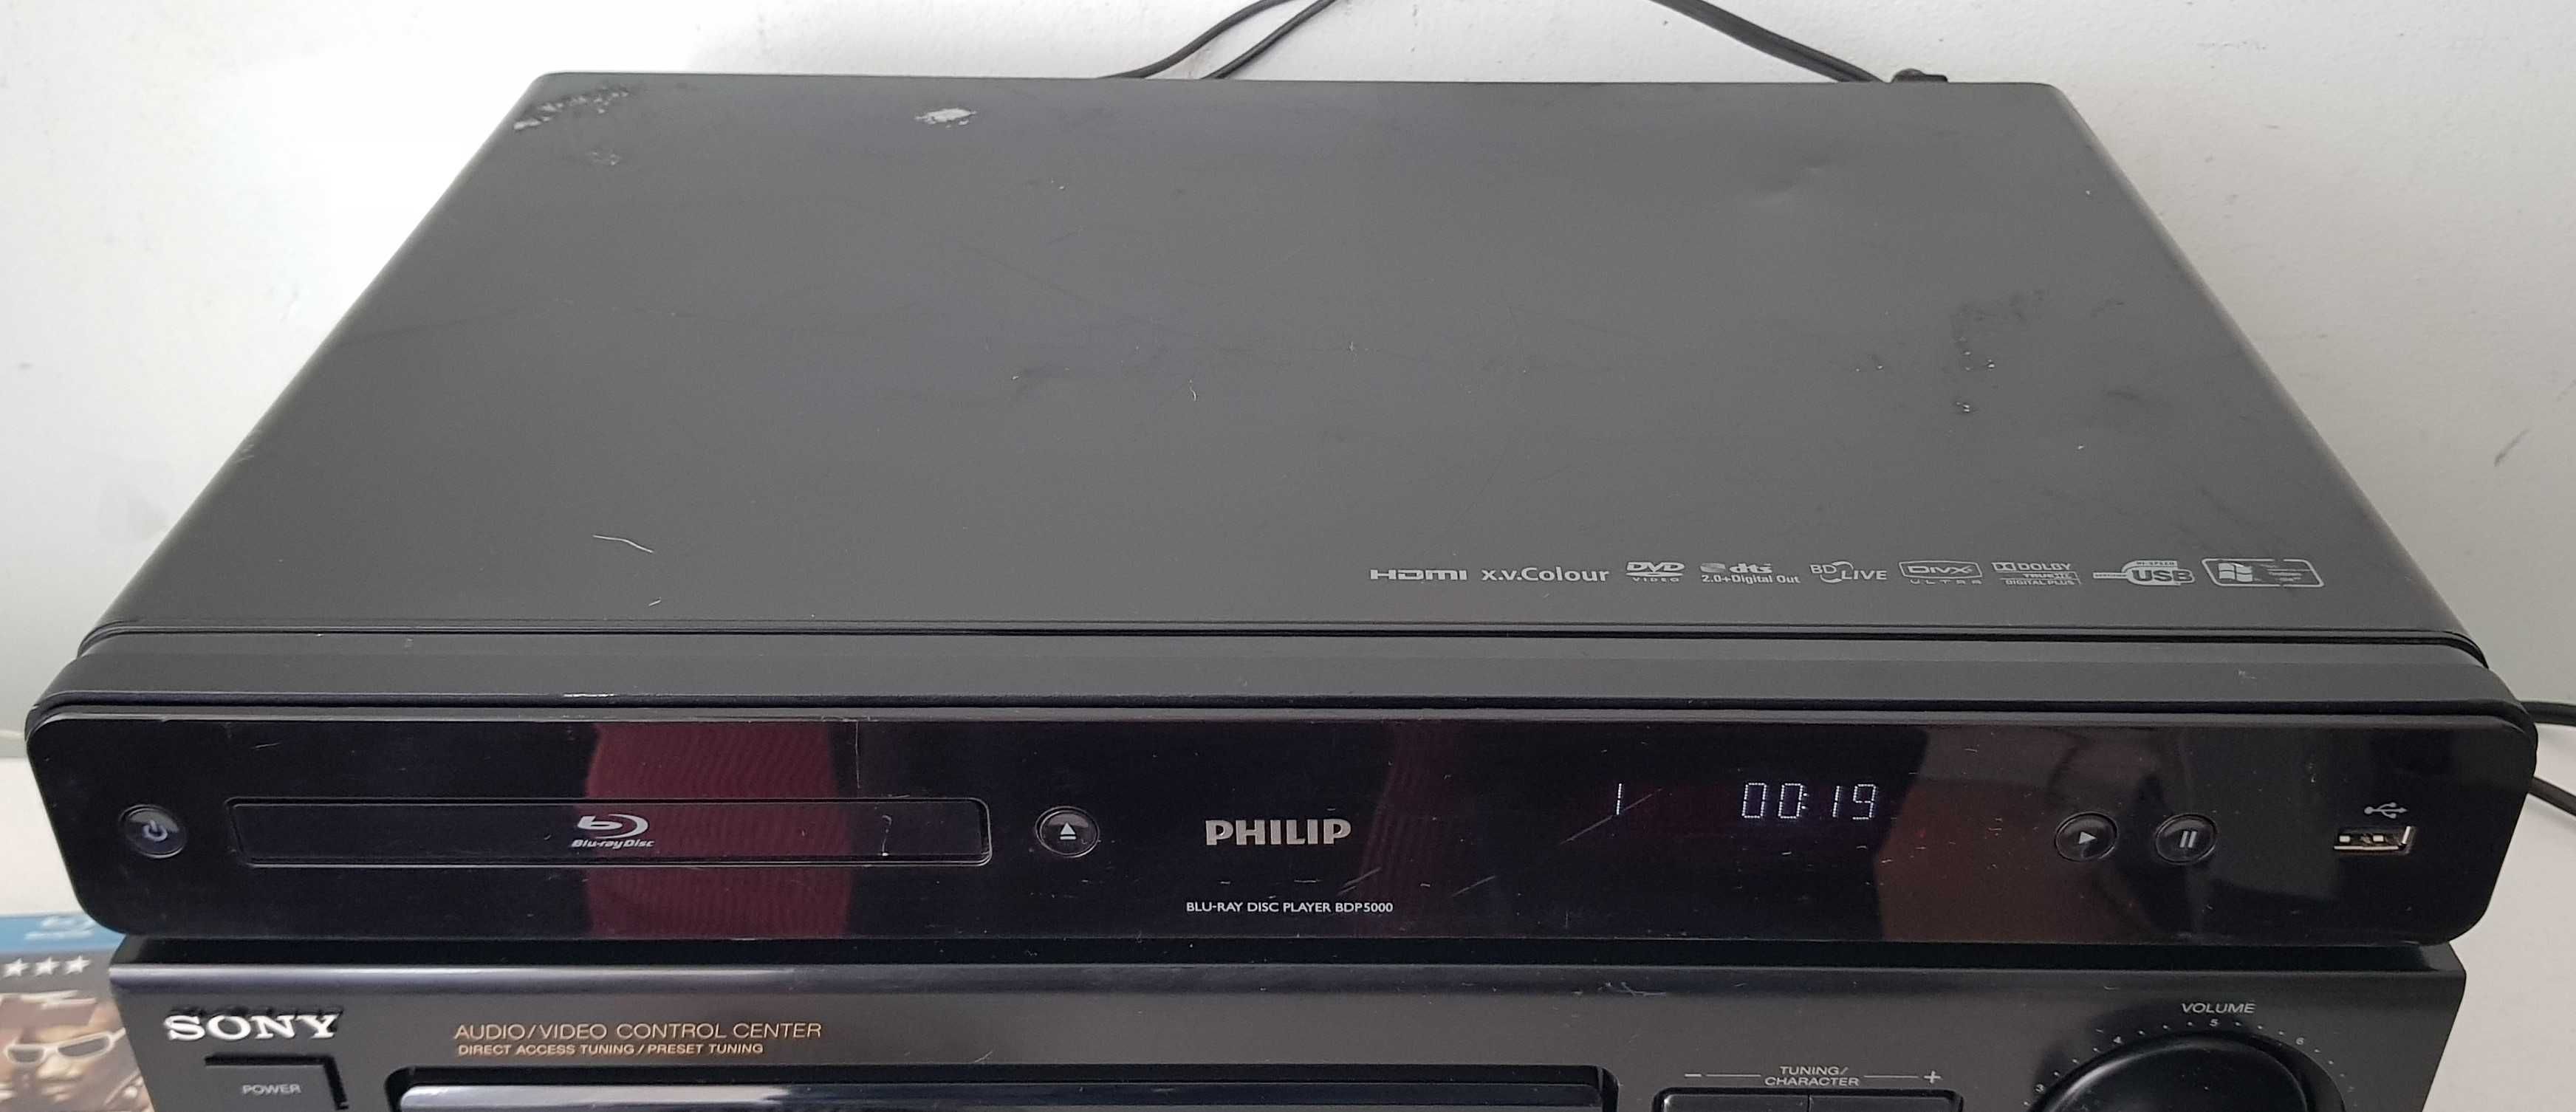 Philips BDP 5000 blu ray player muzica film timp liber